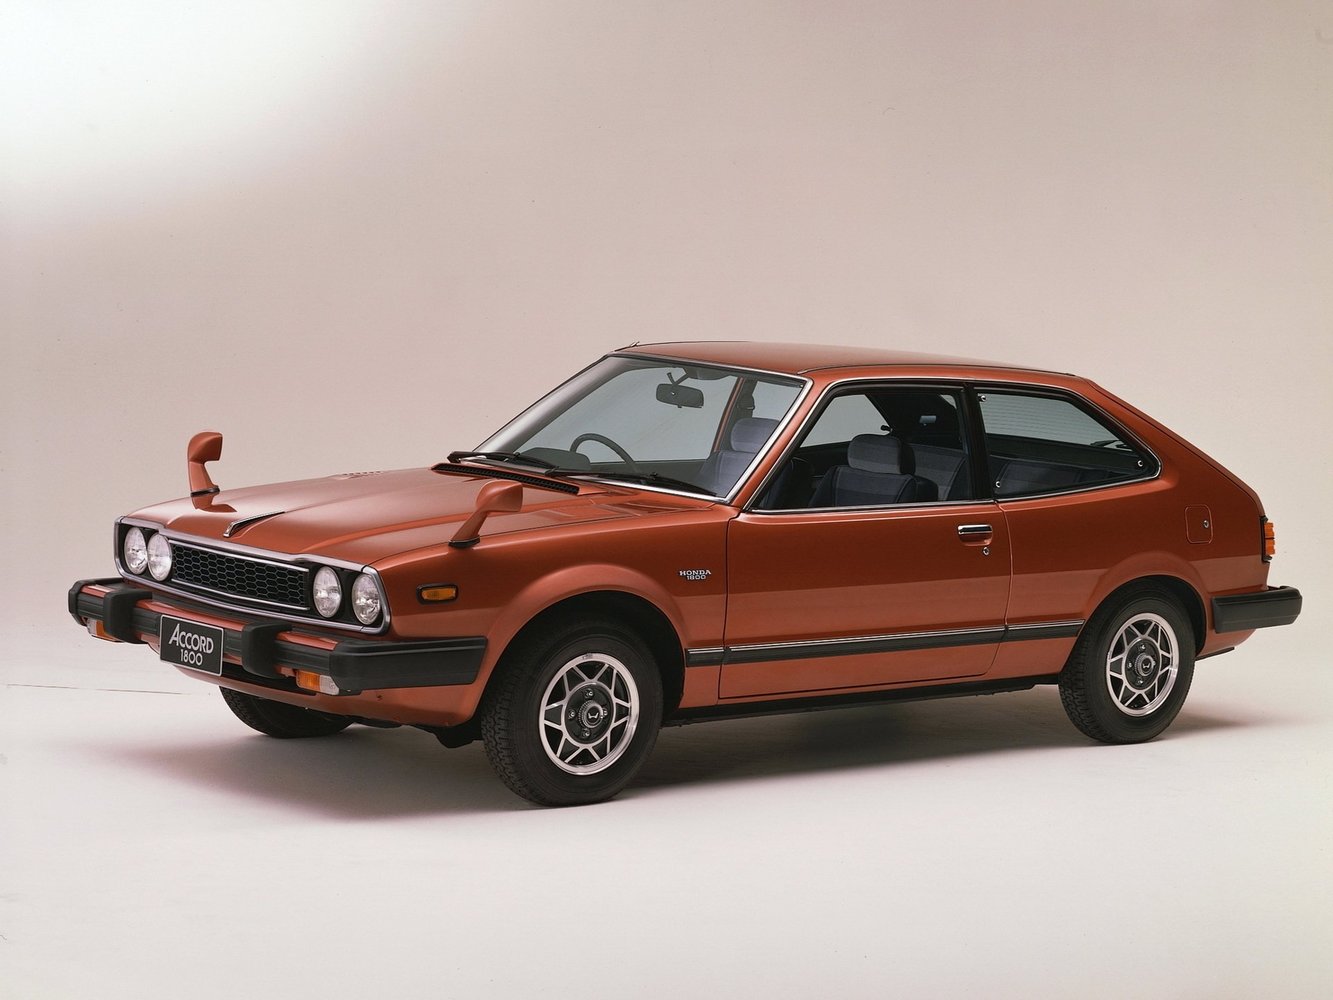 Honda Accord 1976 - 1981